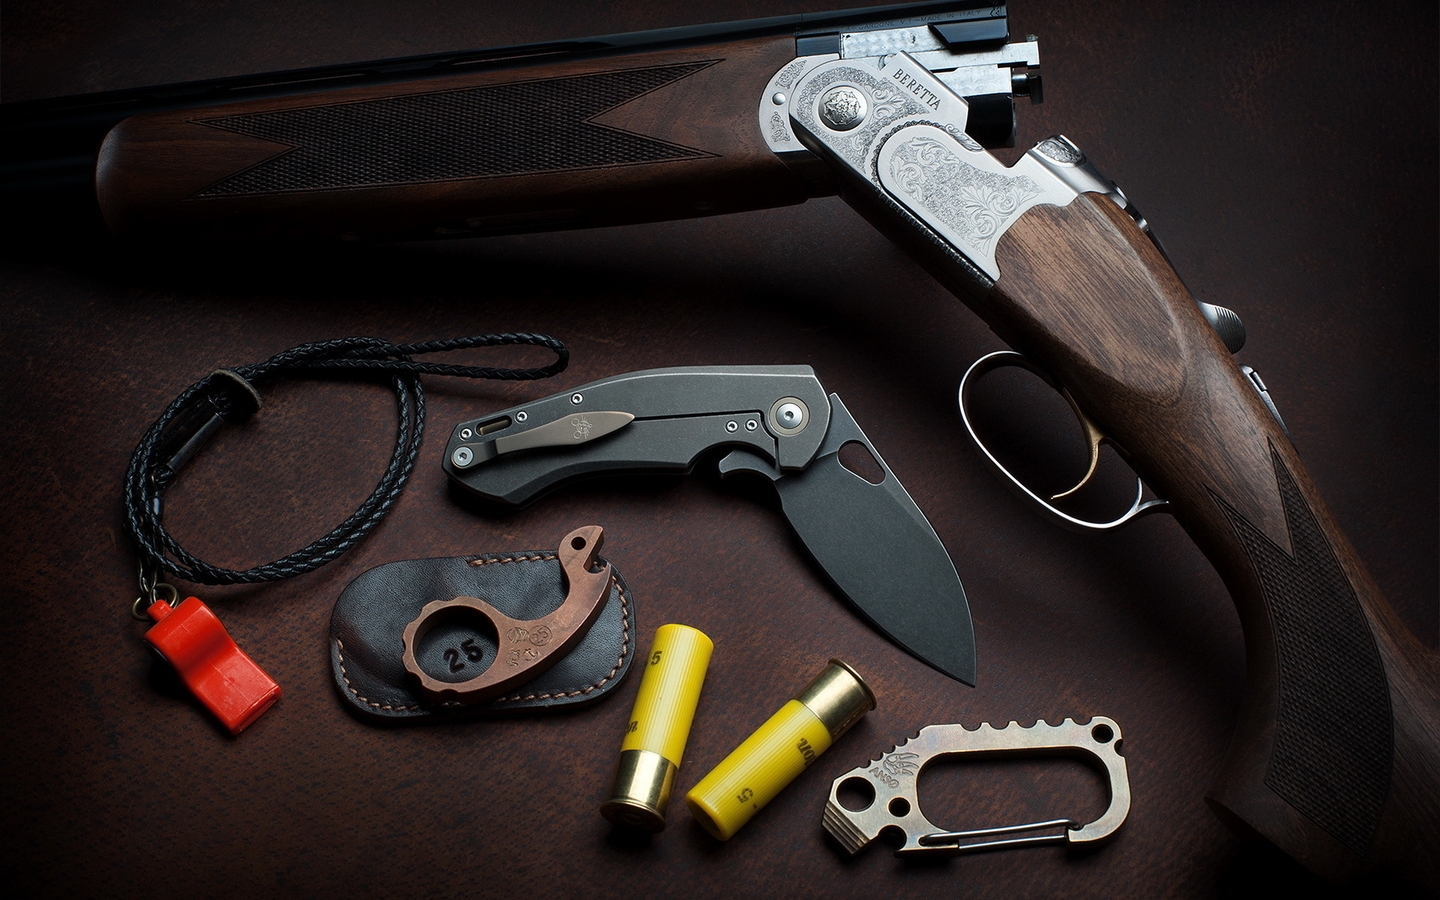 Image: Weapons, Shotgun, BERETTA, Knife, GiantMouse Knives, holster, Ammo, Whistle